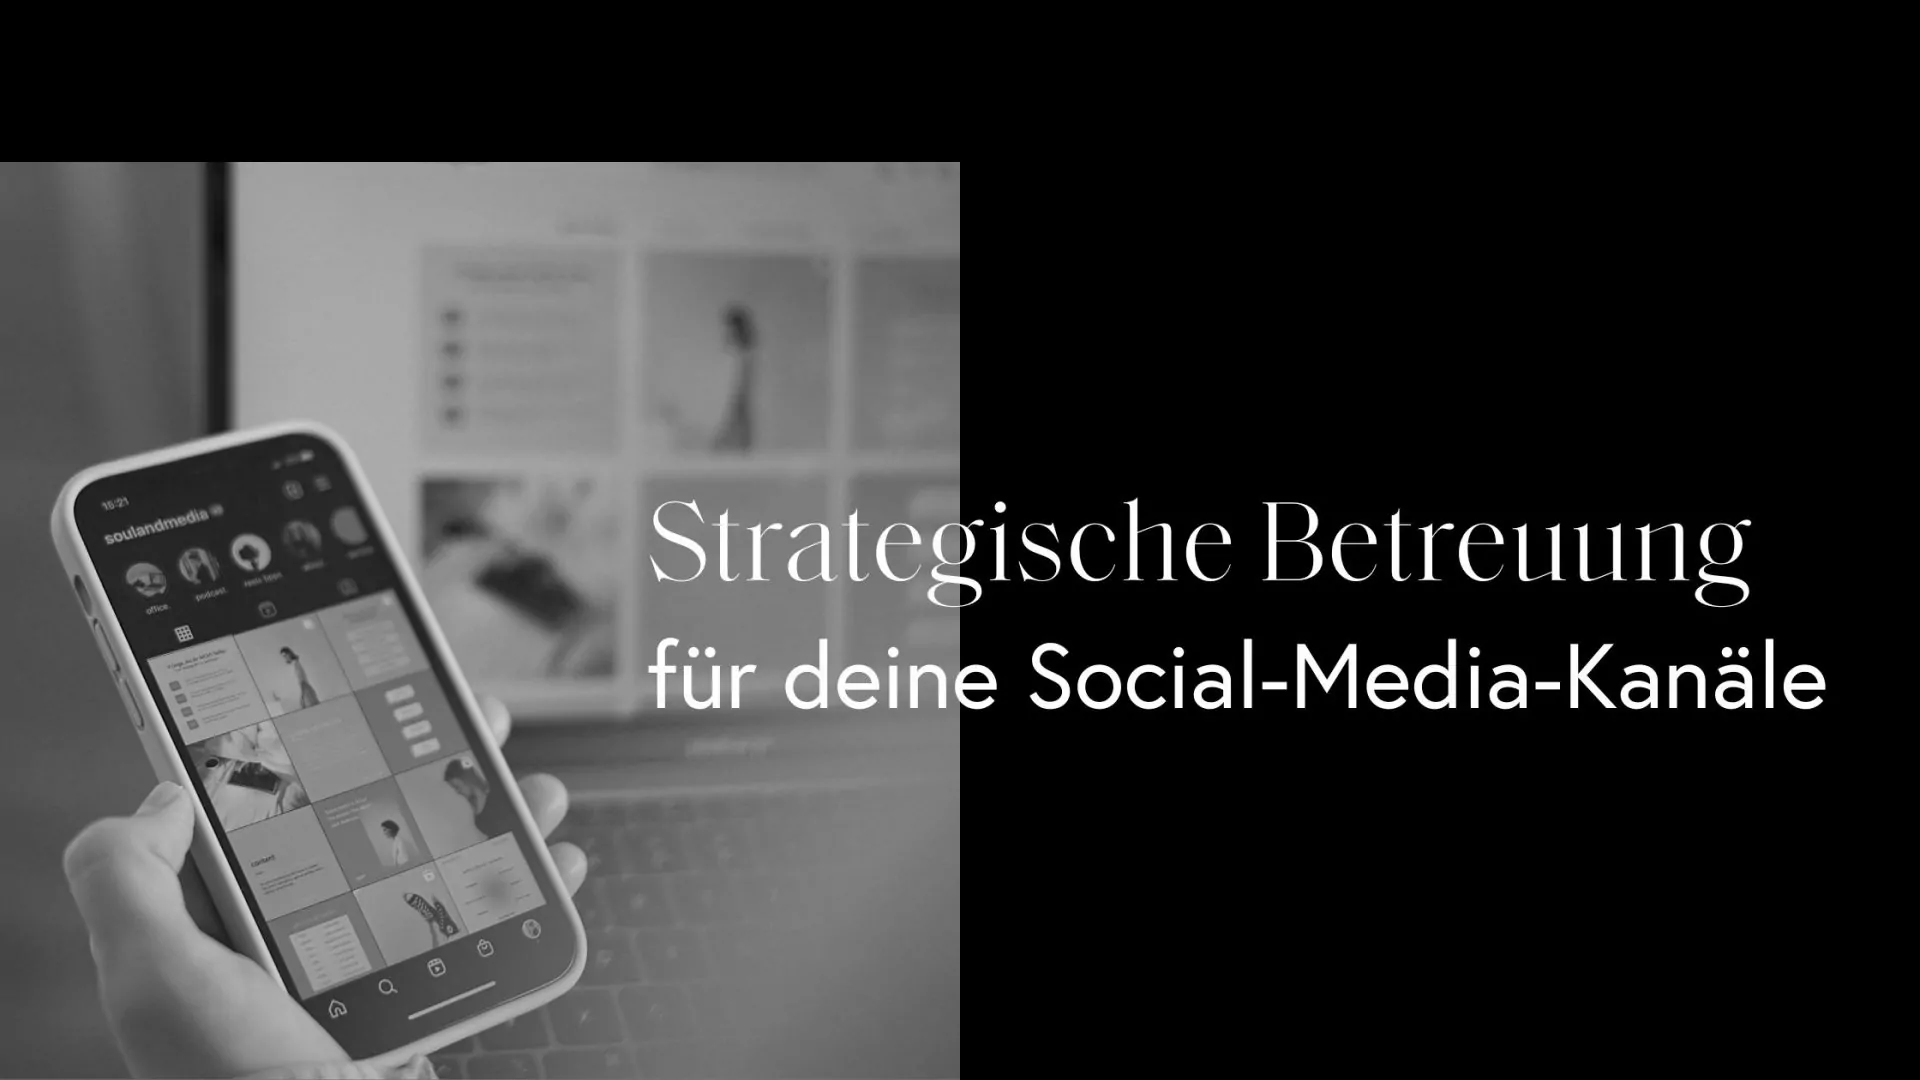 soul and media | Social Media Marketing Herford, Bielefeld, OWL